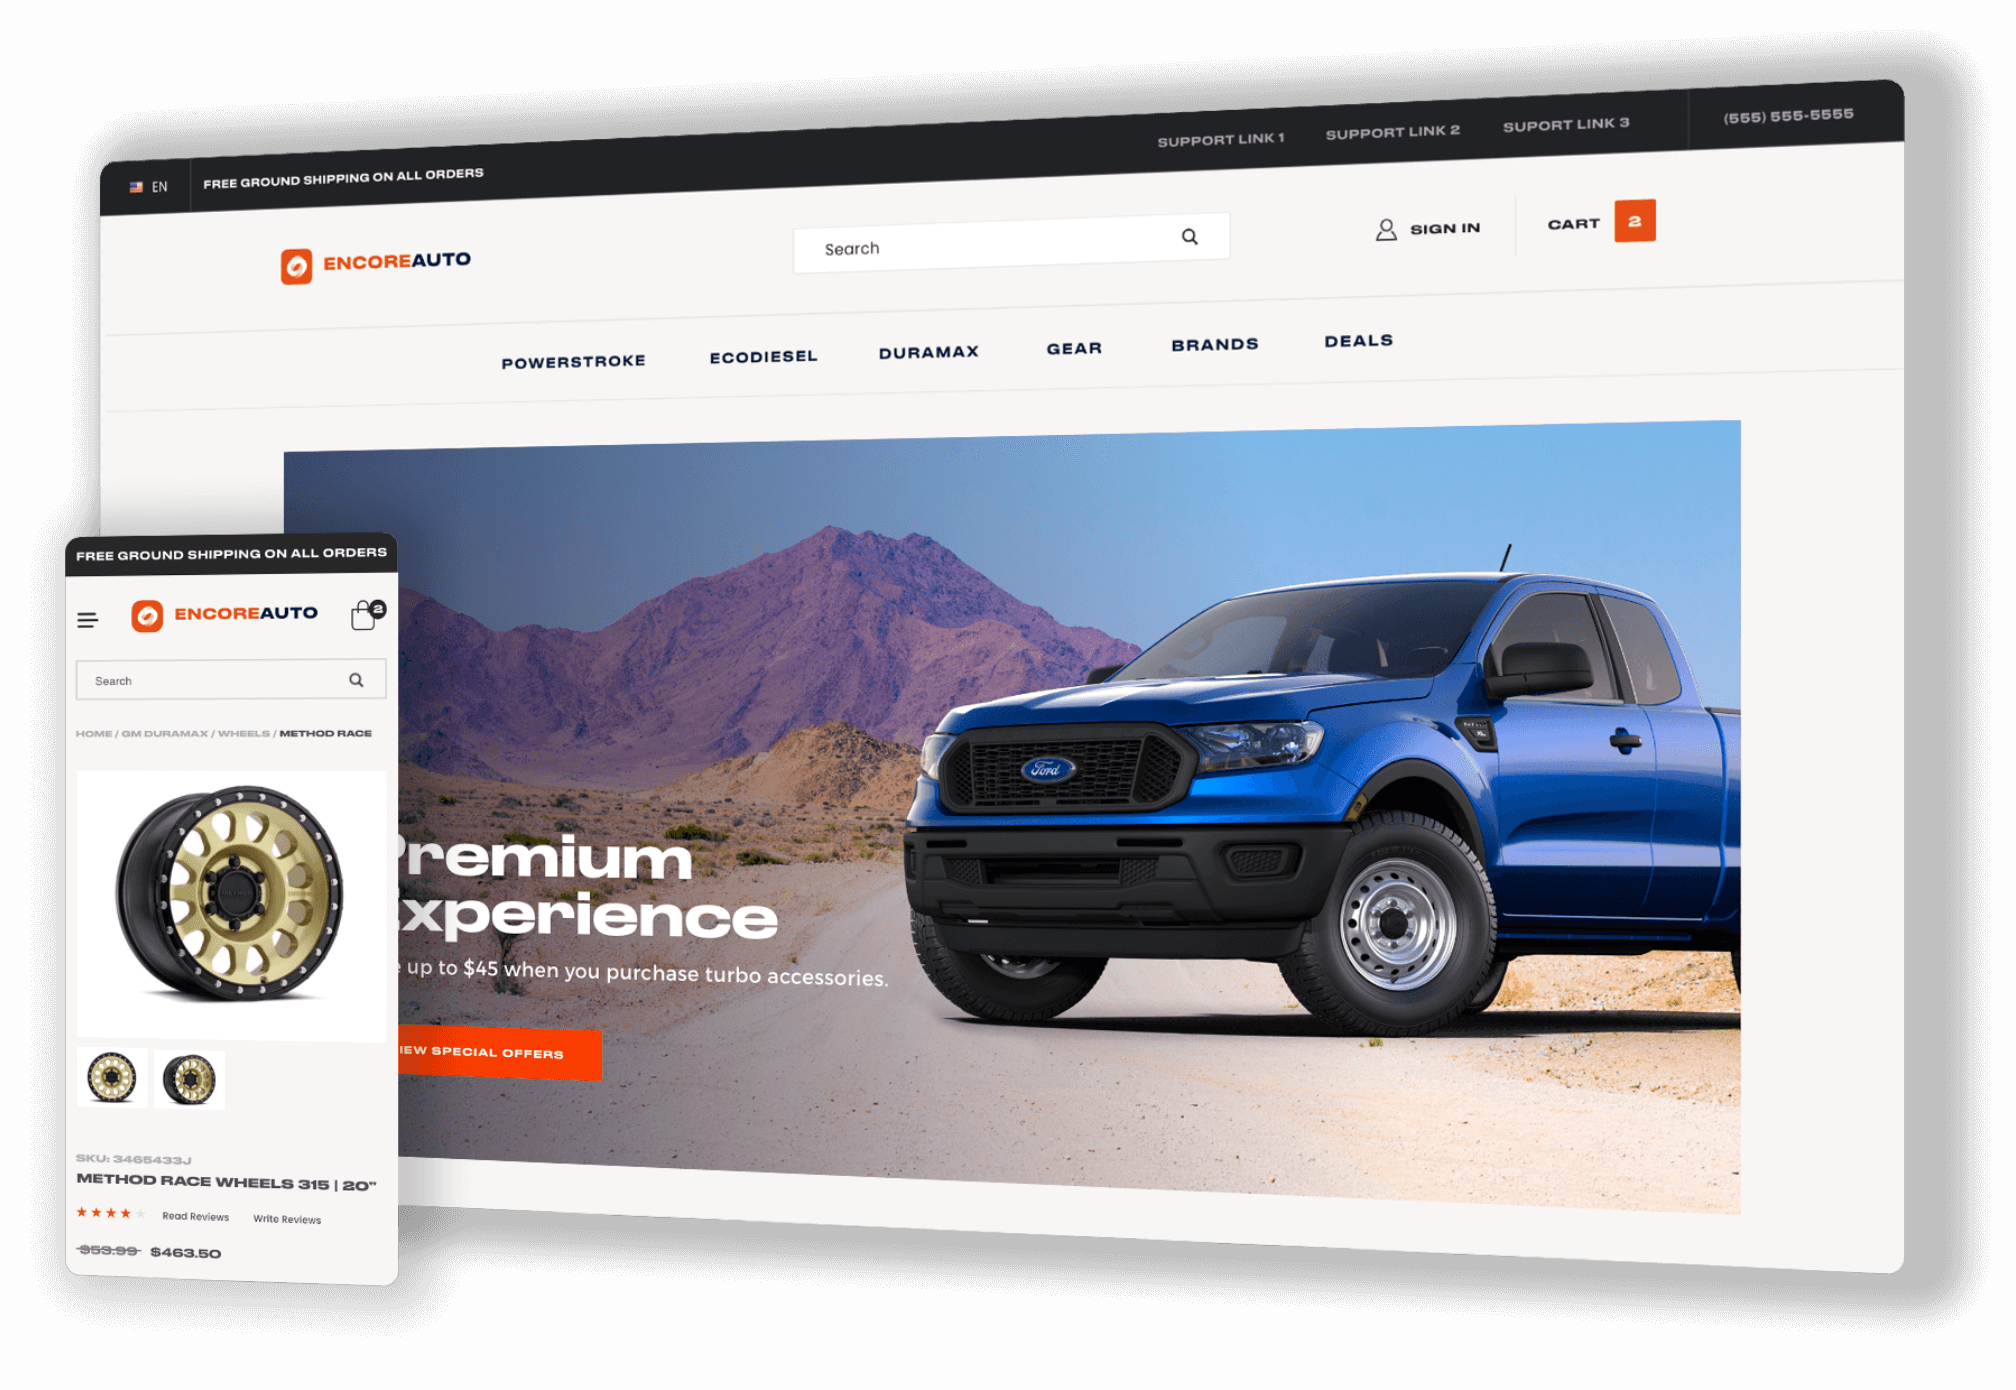 Desktop and mobile versions of automotive website storefront.